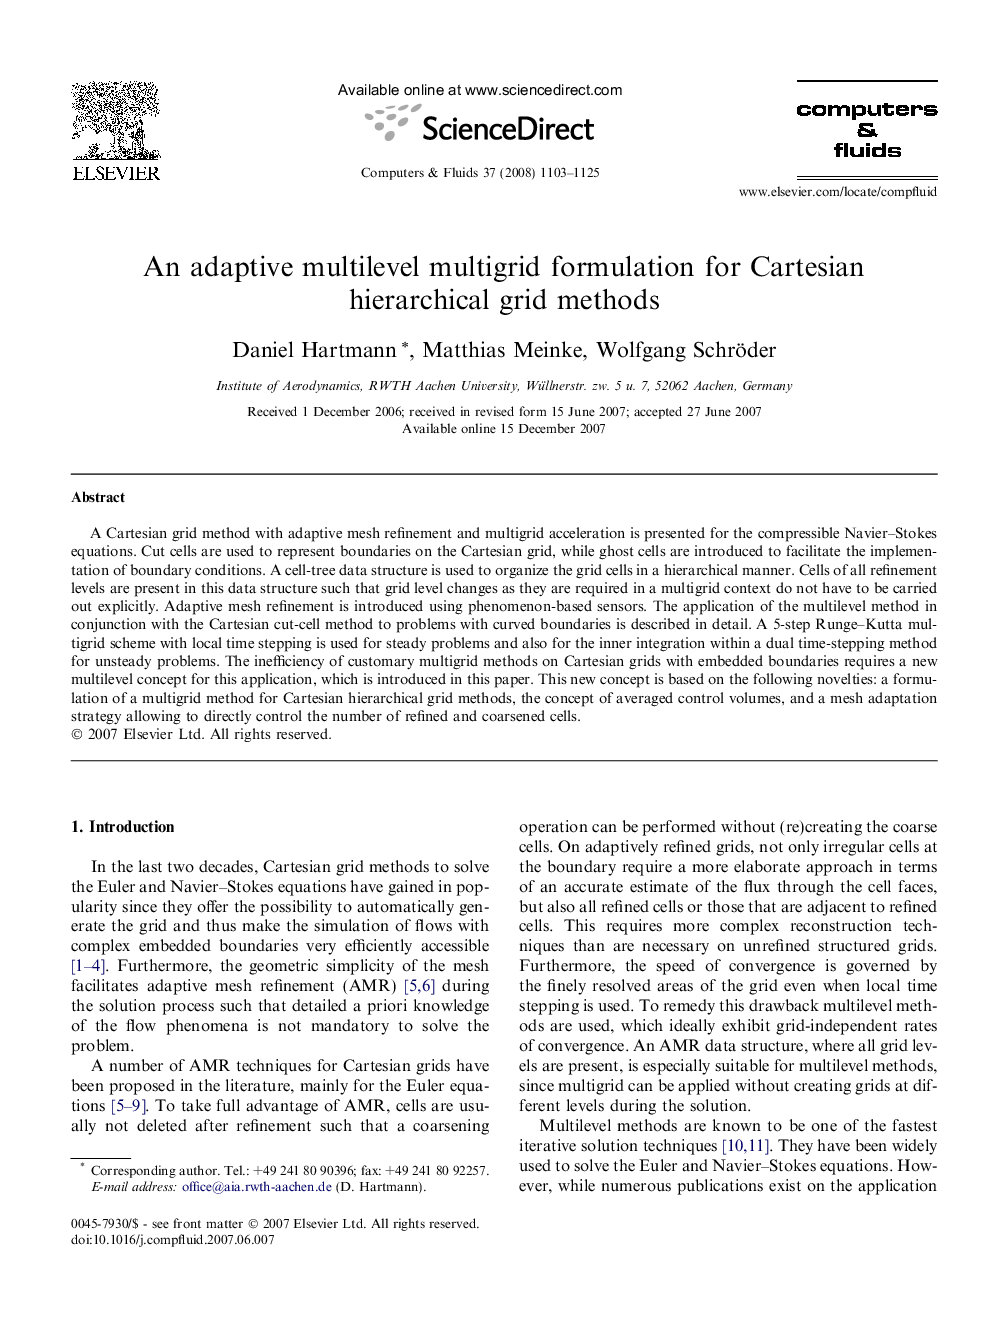 An adaptive multilevel multigrid formulation for Cartesian hierarchical grid methods